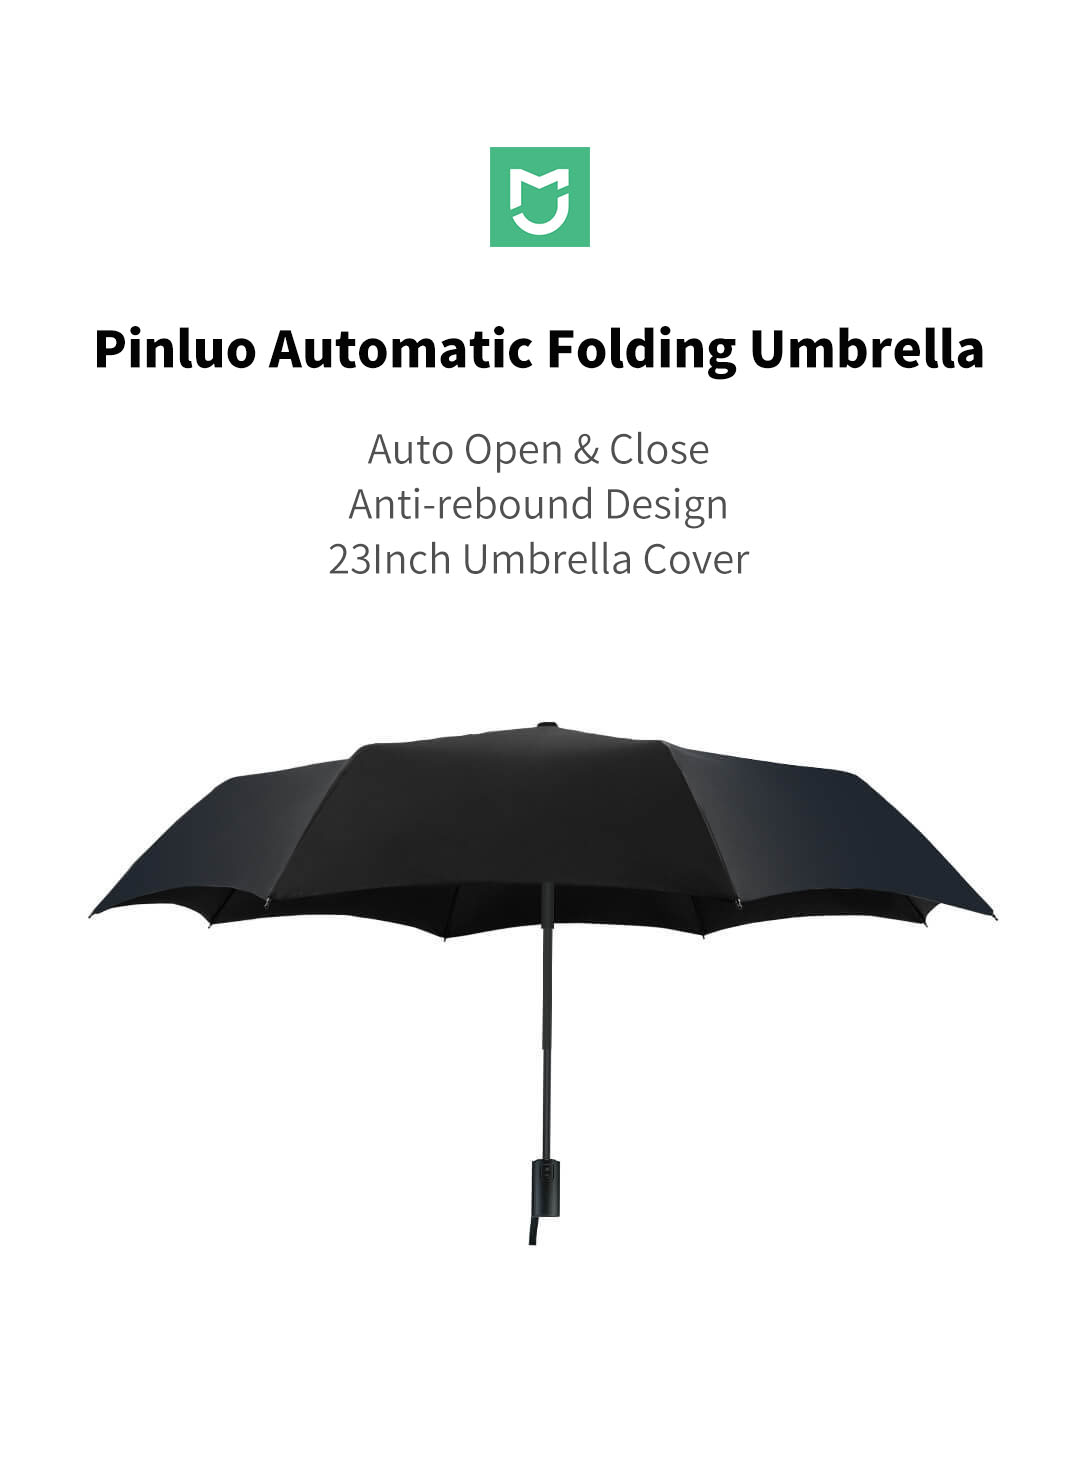 xiaomi mijia pinluo upf 50 automatic folding umbrella